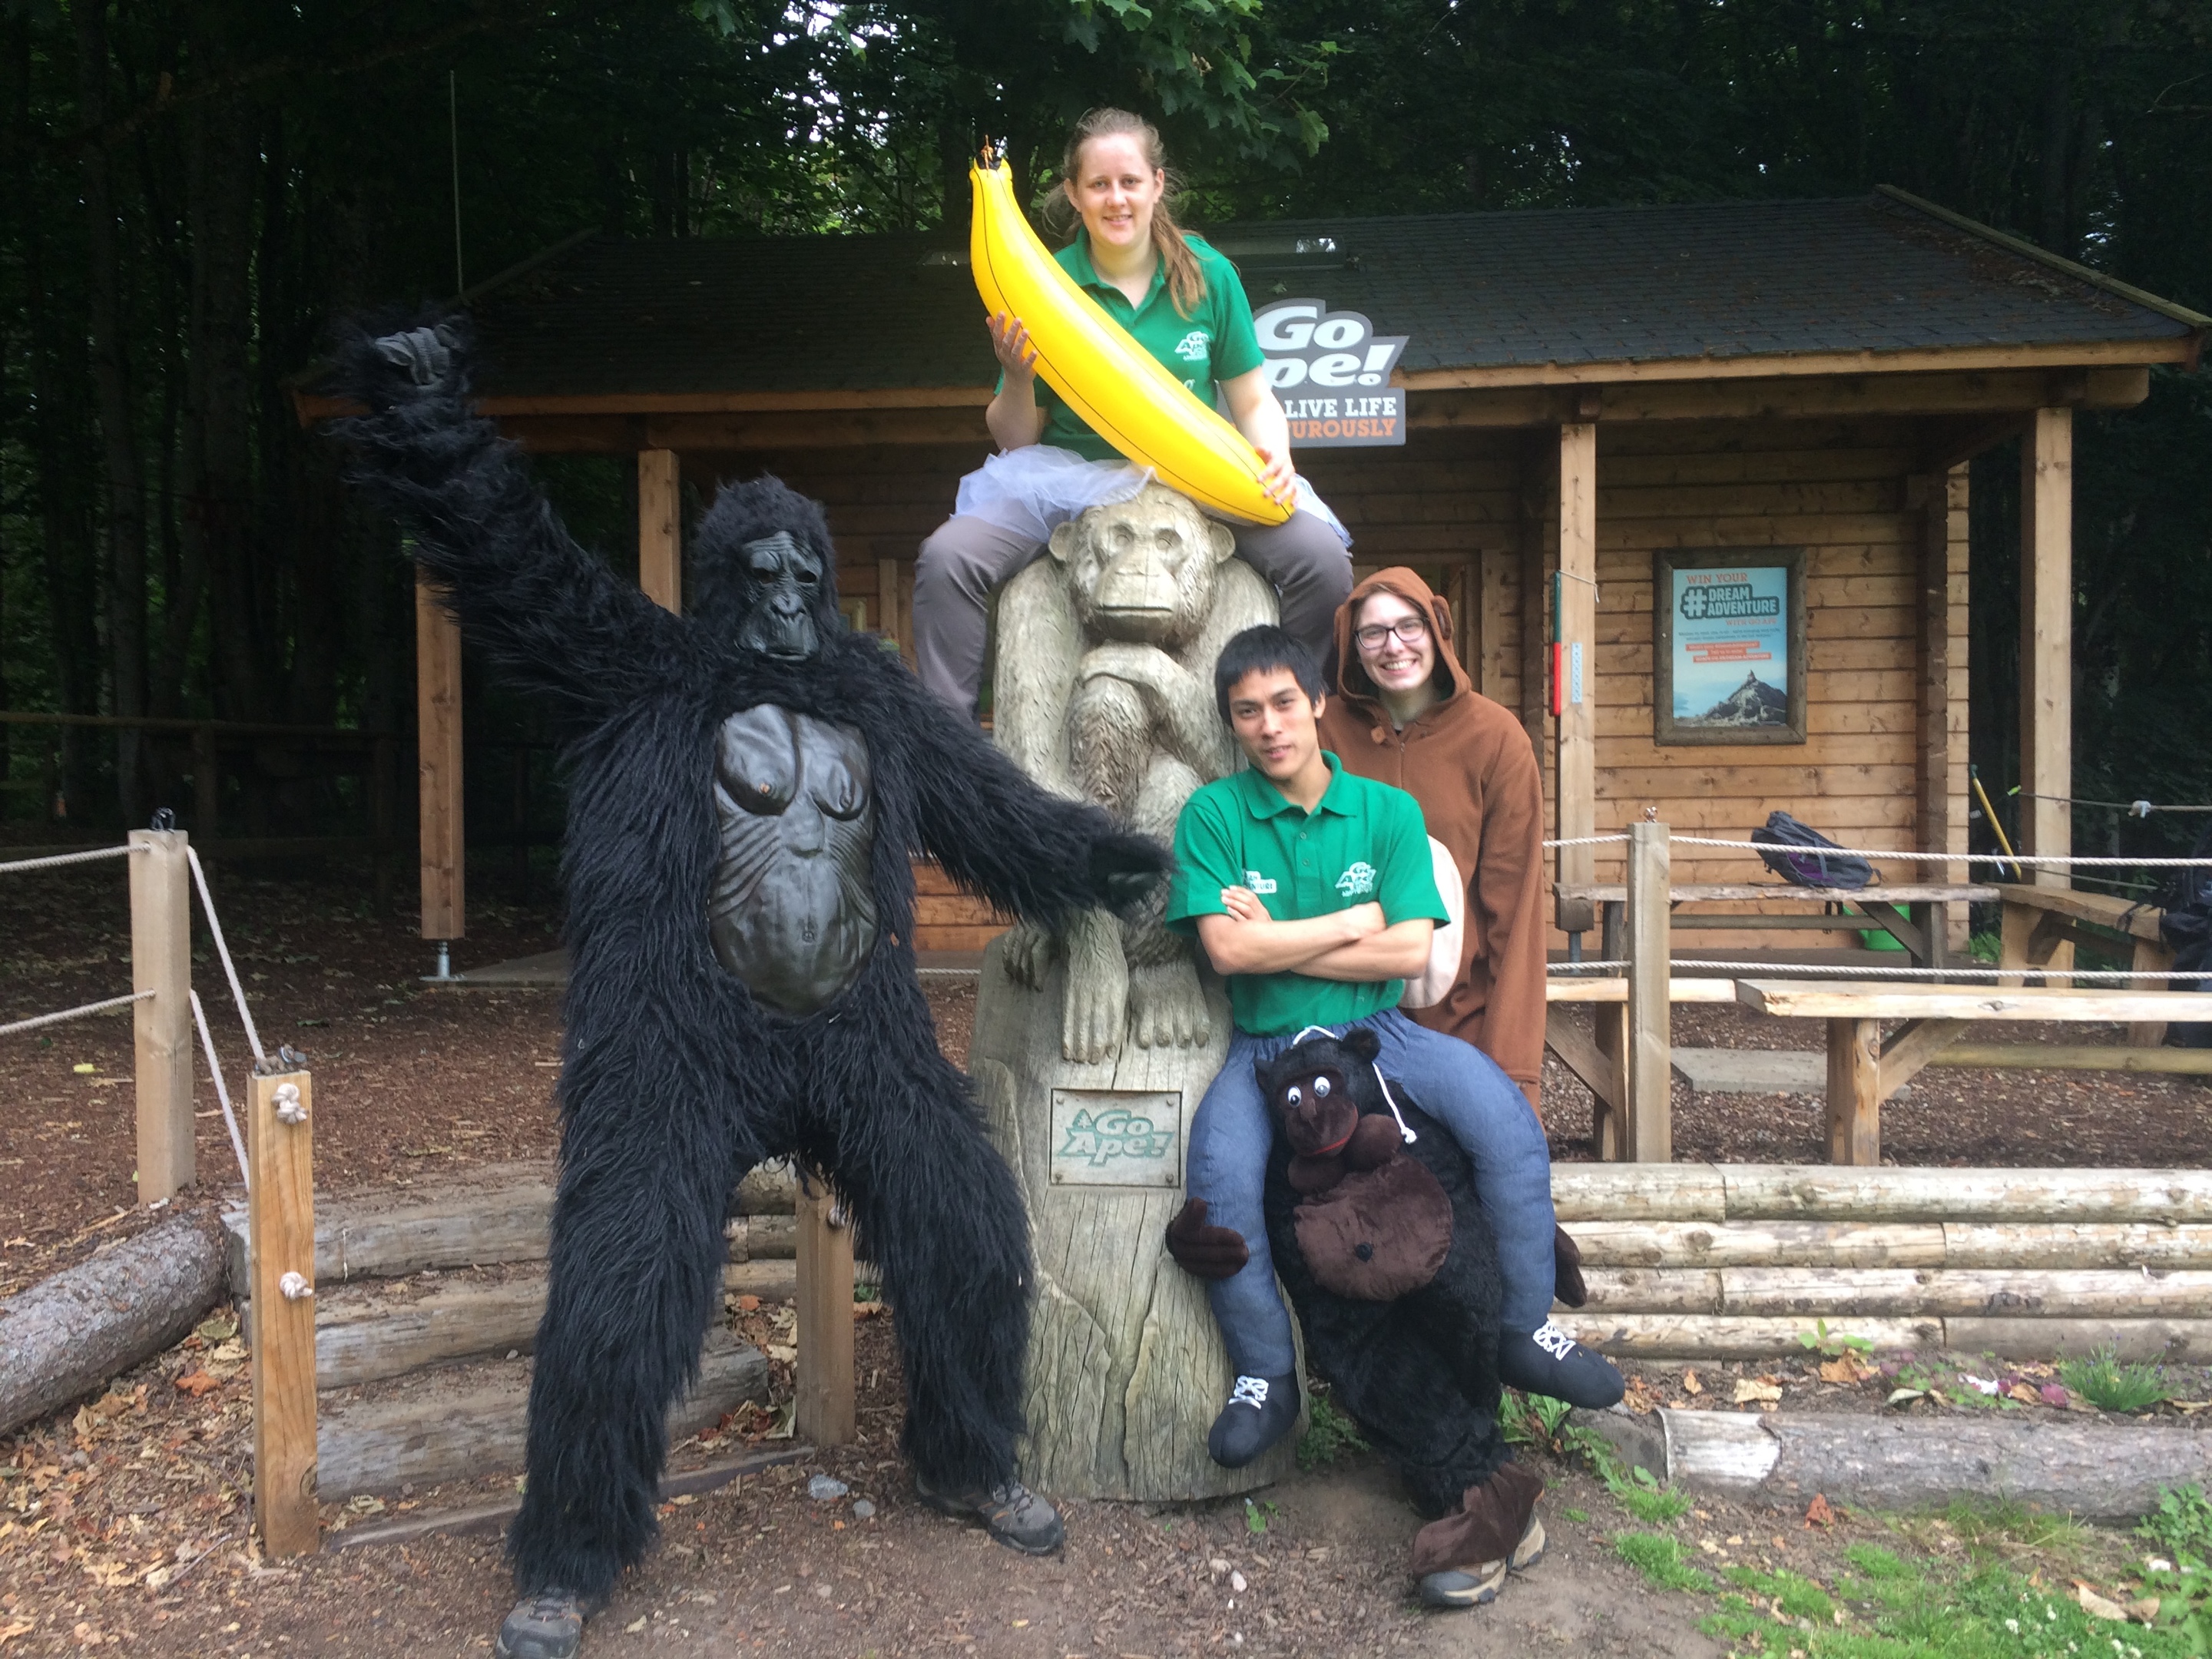 The Go Ape runners - left to right: John Black in gorilla suit, Pauline Anderson (holding banana), Ewen Kerridge and Bethany Tennant.